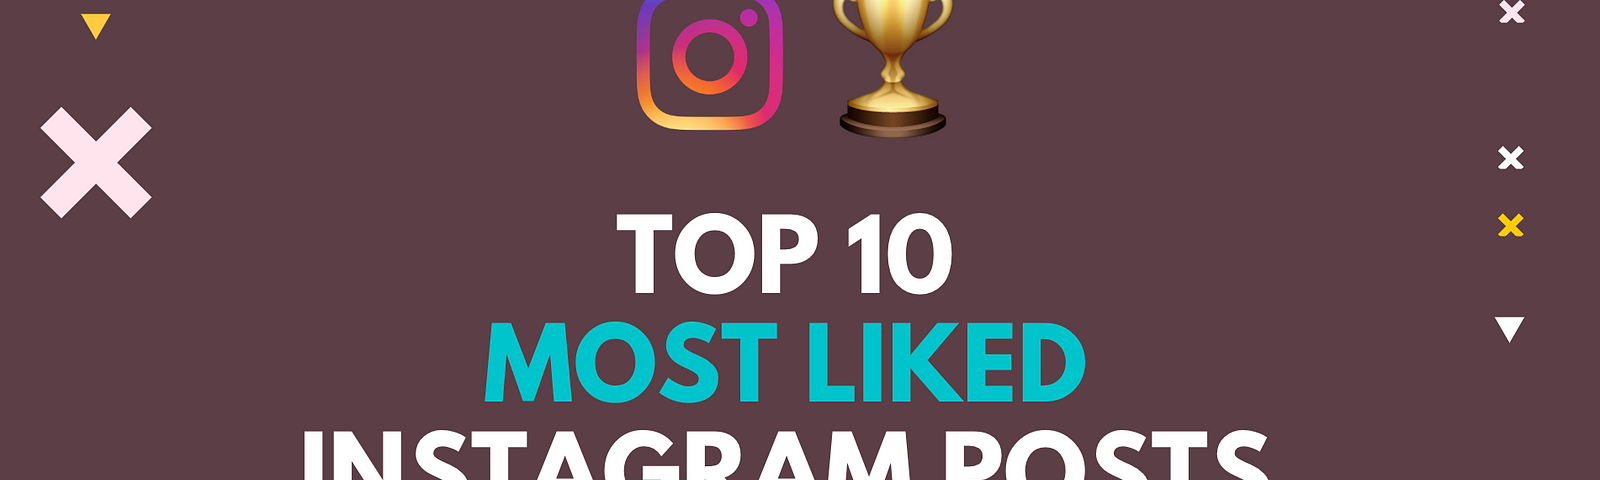 Top 10 Most-Liked Instagram Post in October 2019 Presented by SocialBook